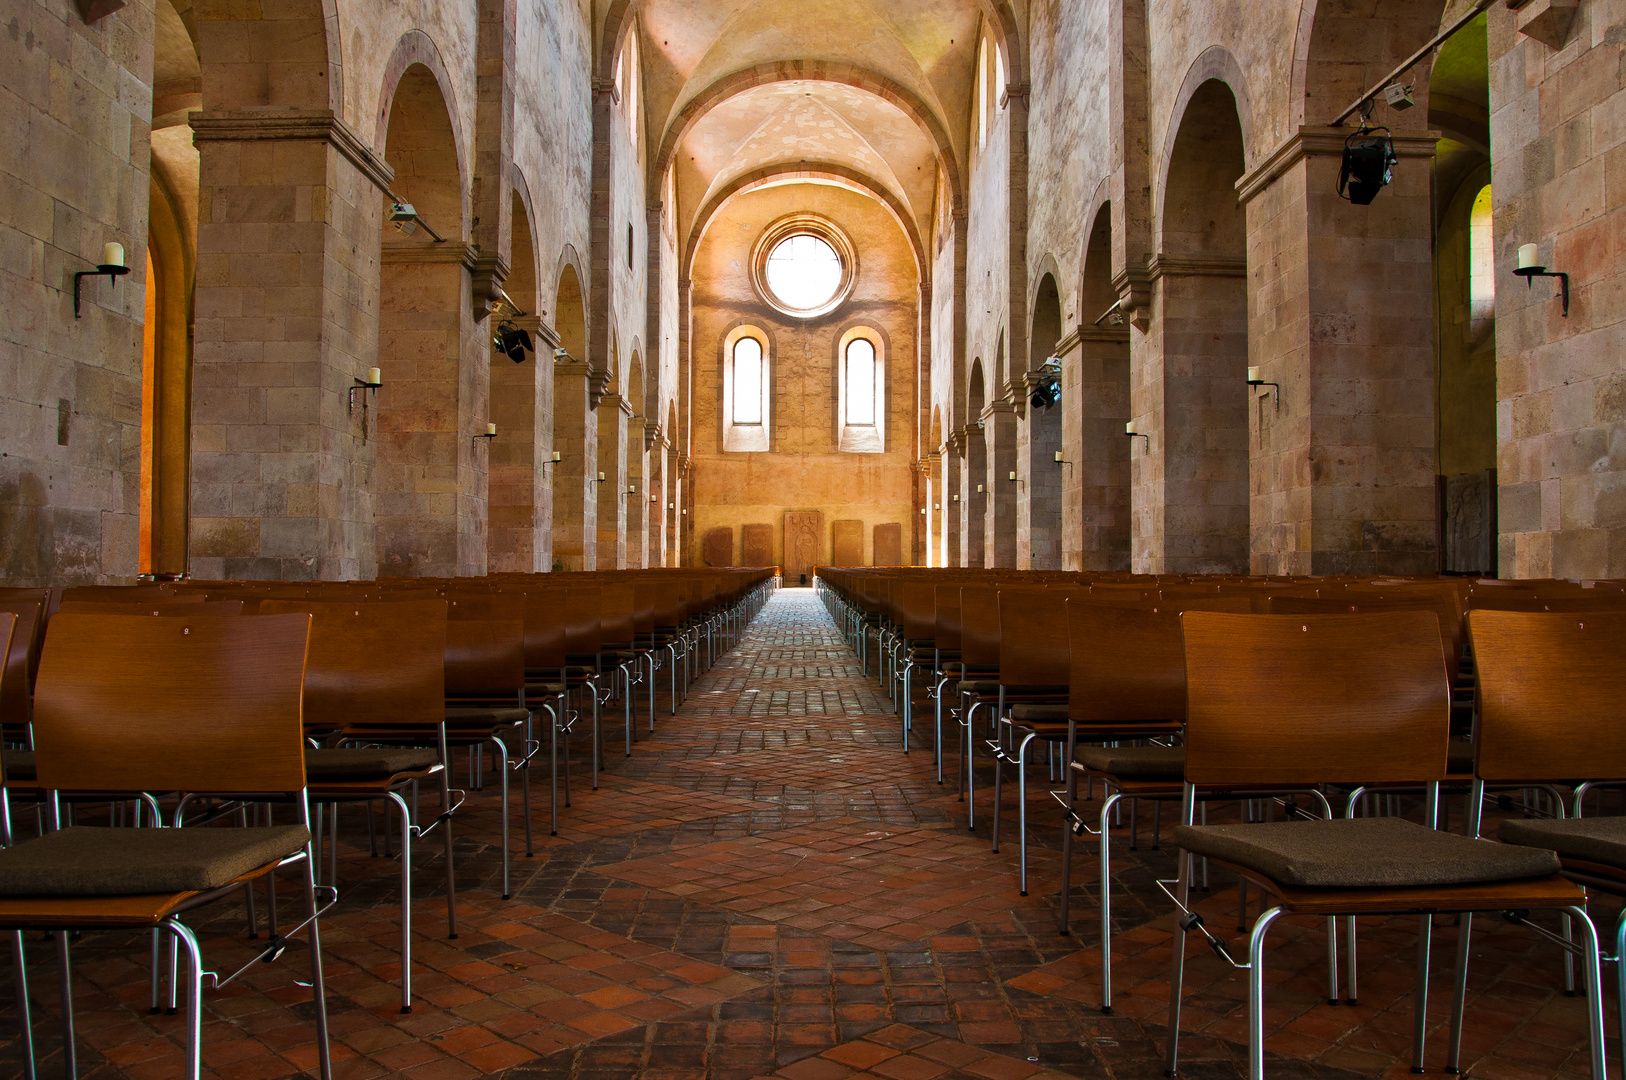 Kloster Eberbach - Basilika